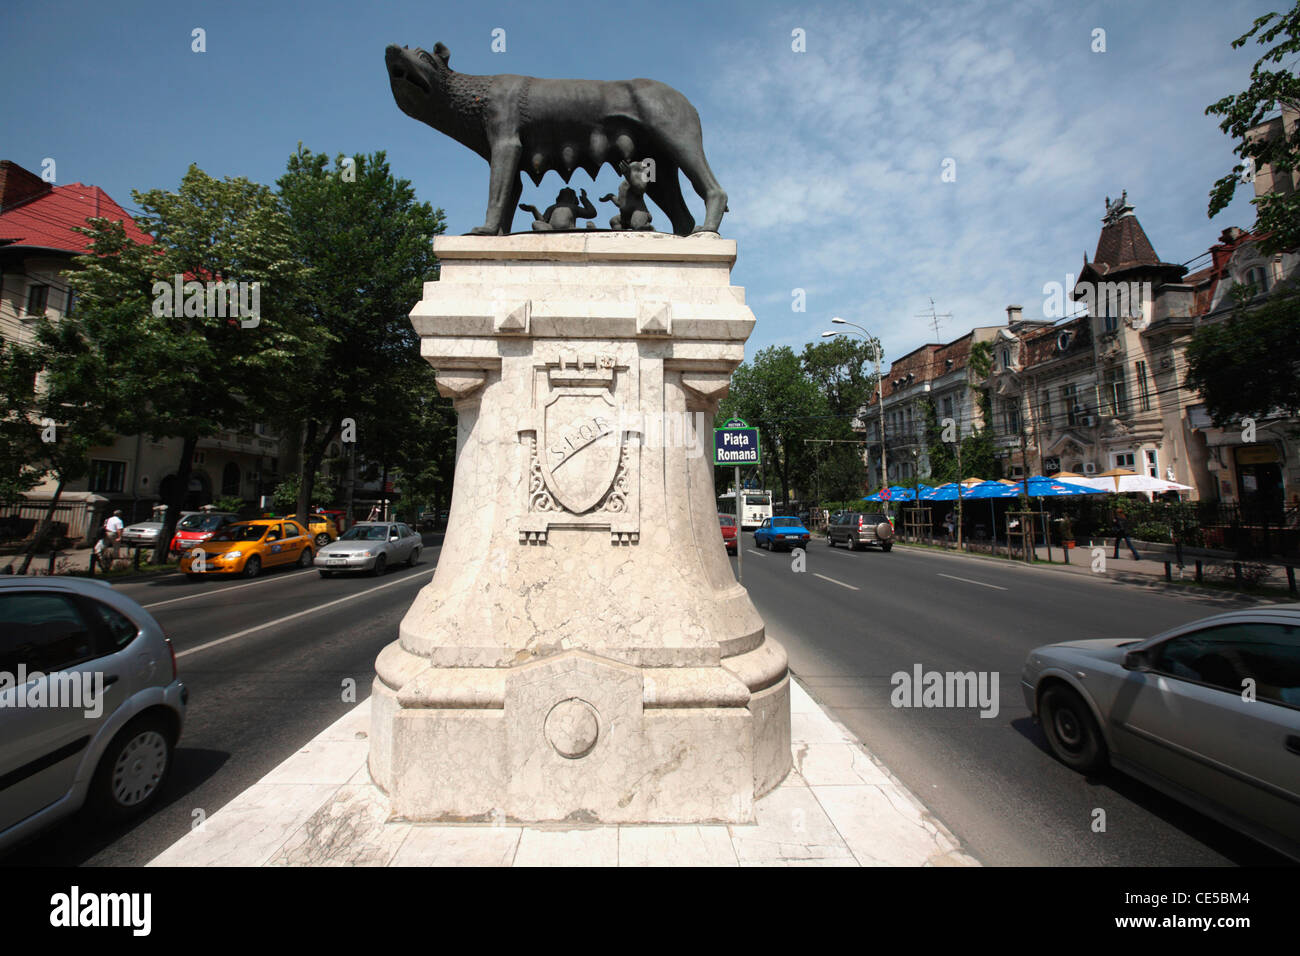 Europe, Romania, Bucharest, Statue of Romulus and Remus in Roman Plaza Stock Photo